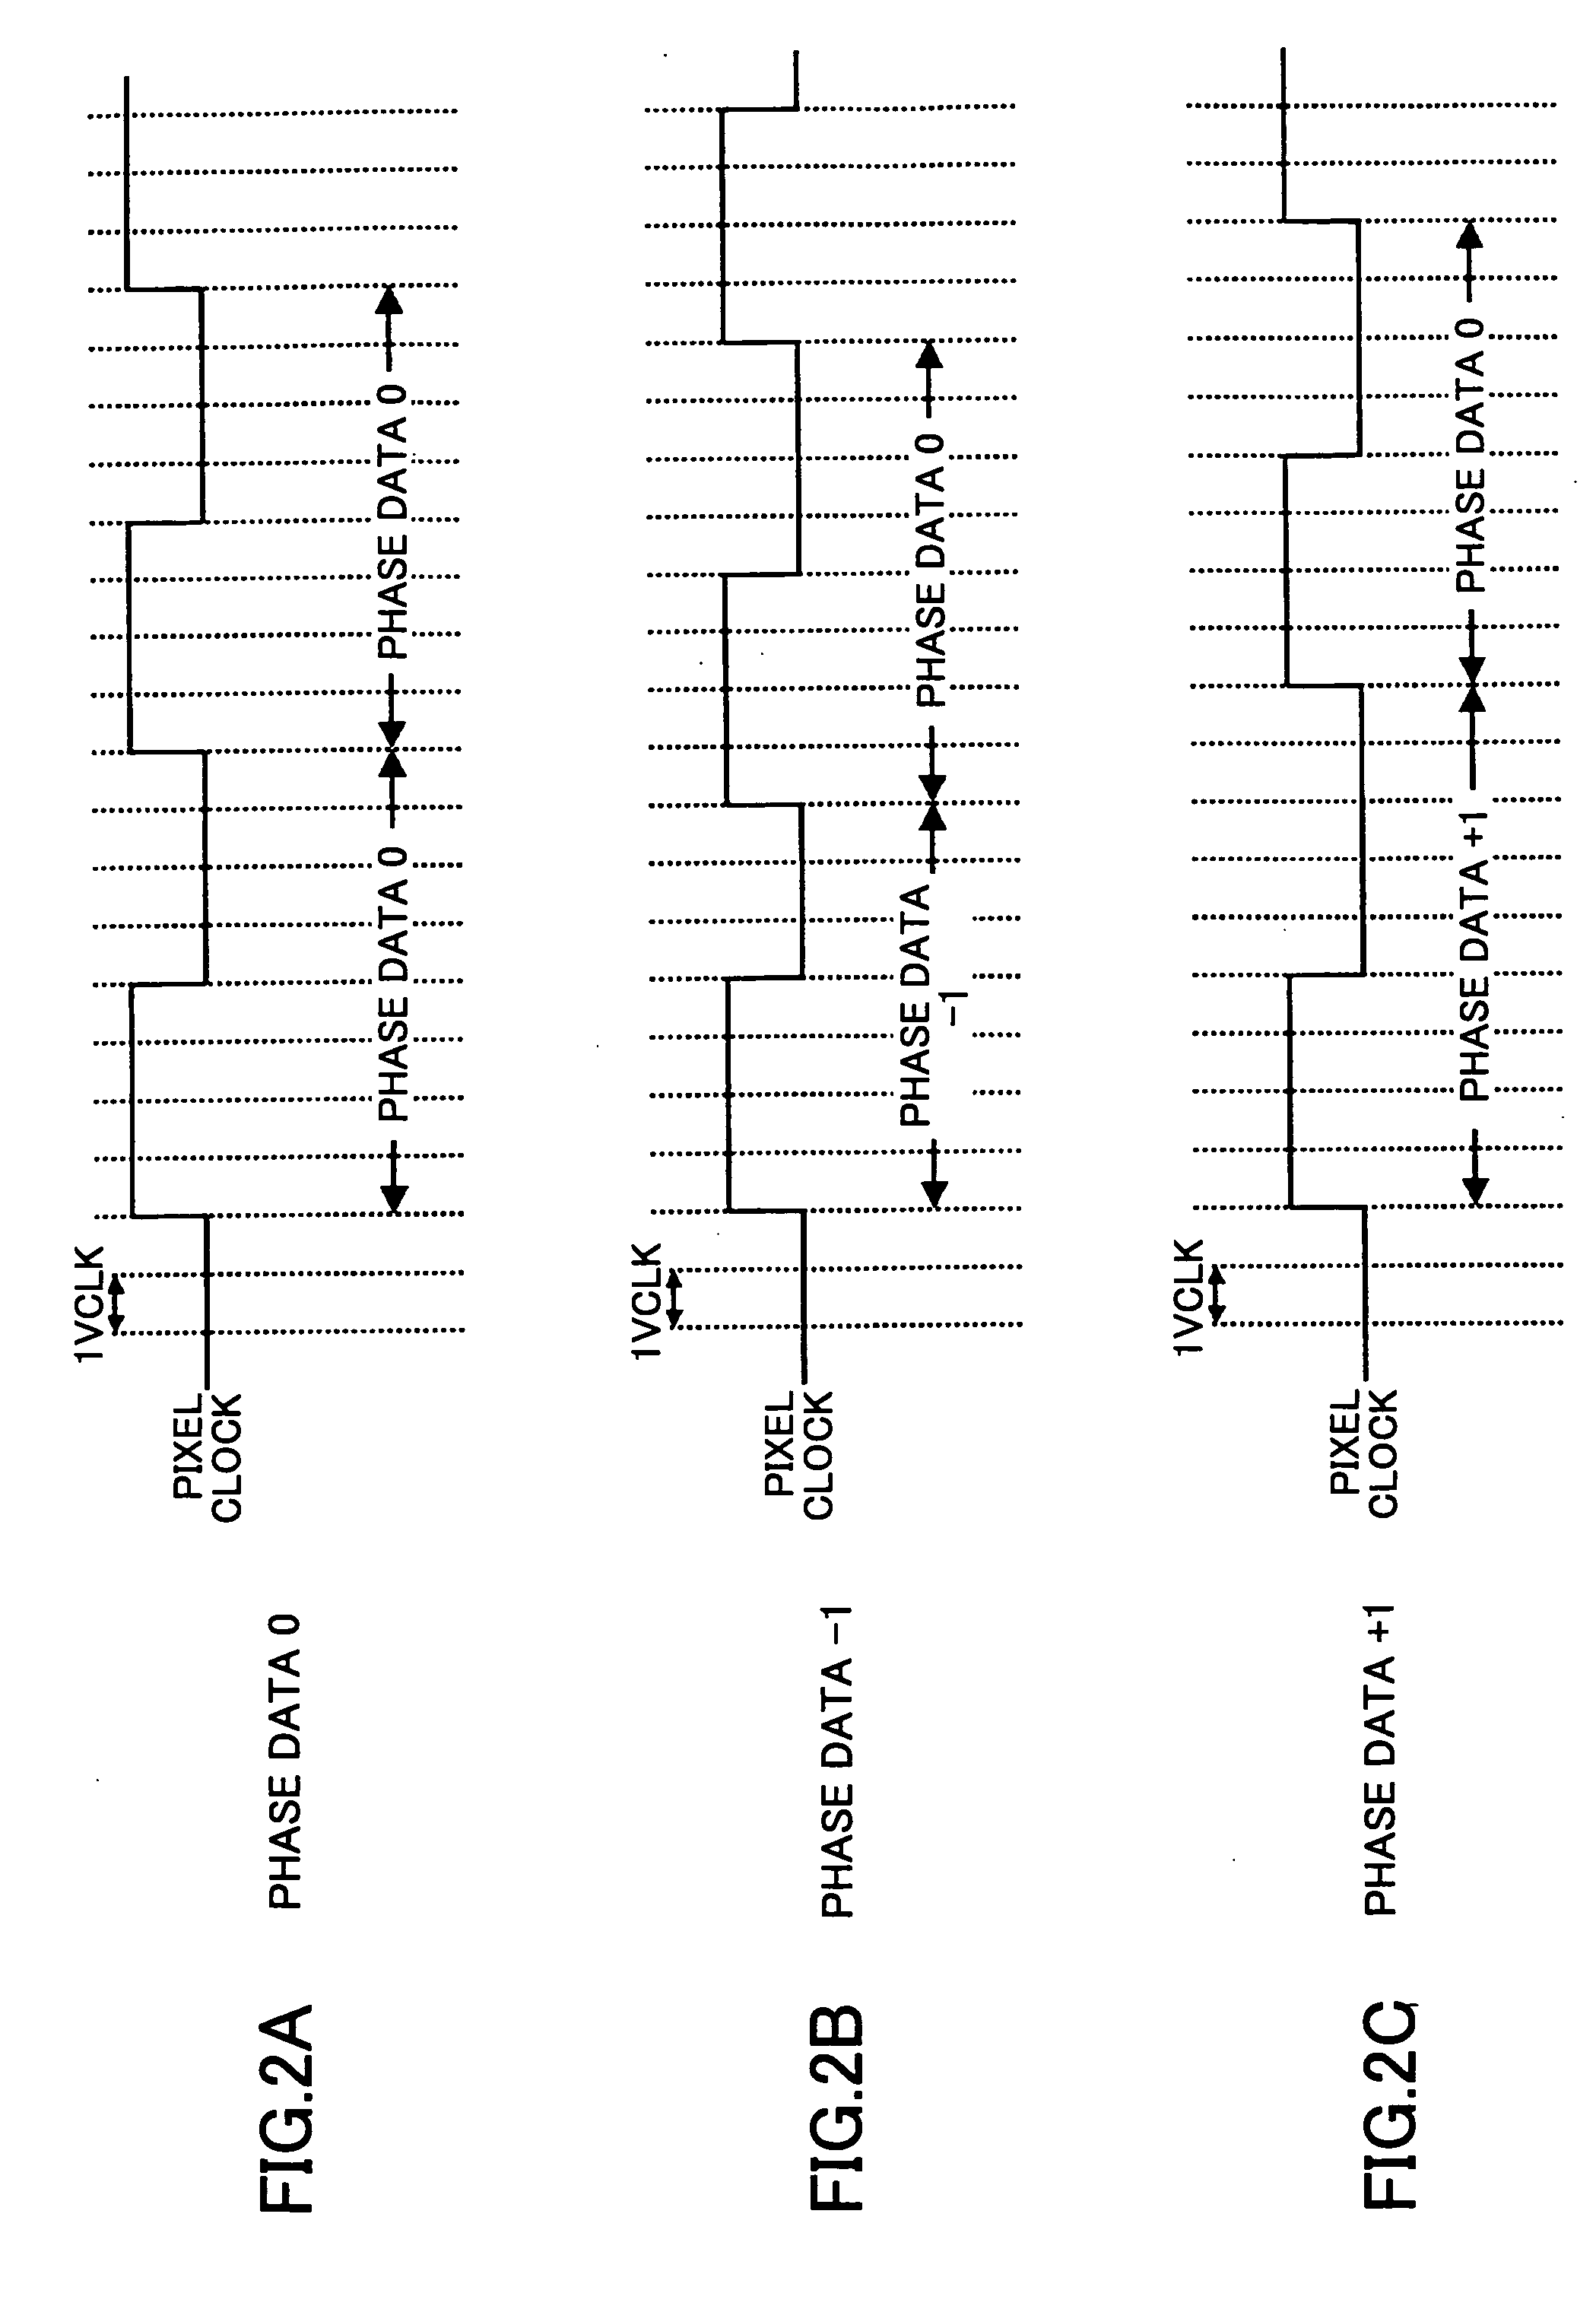 Pixel clock generation circuit